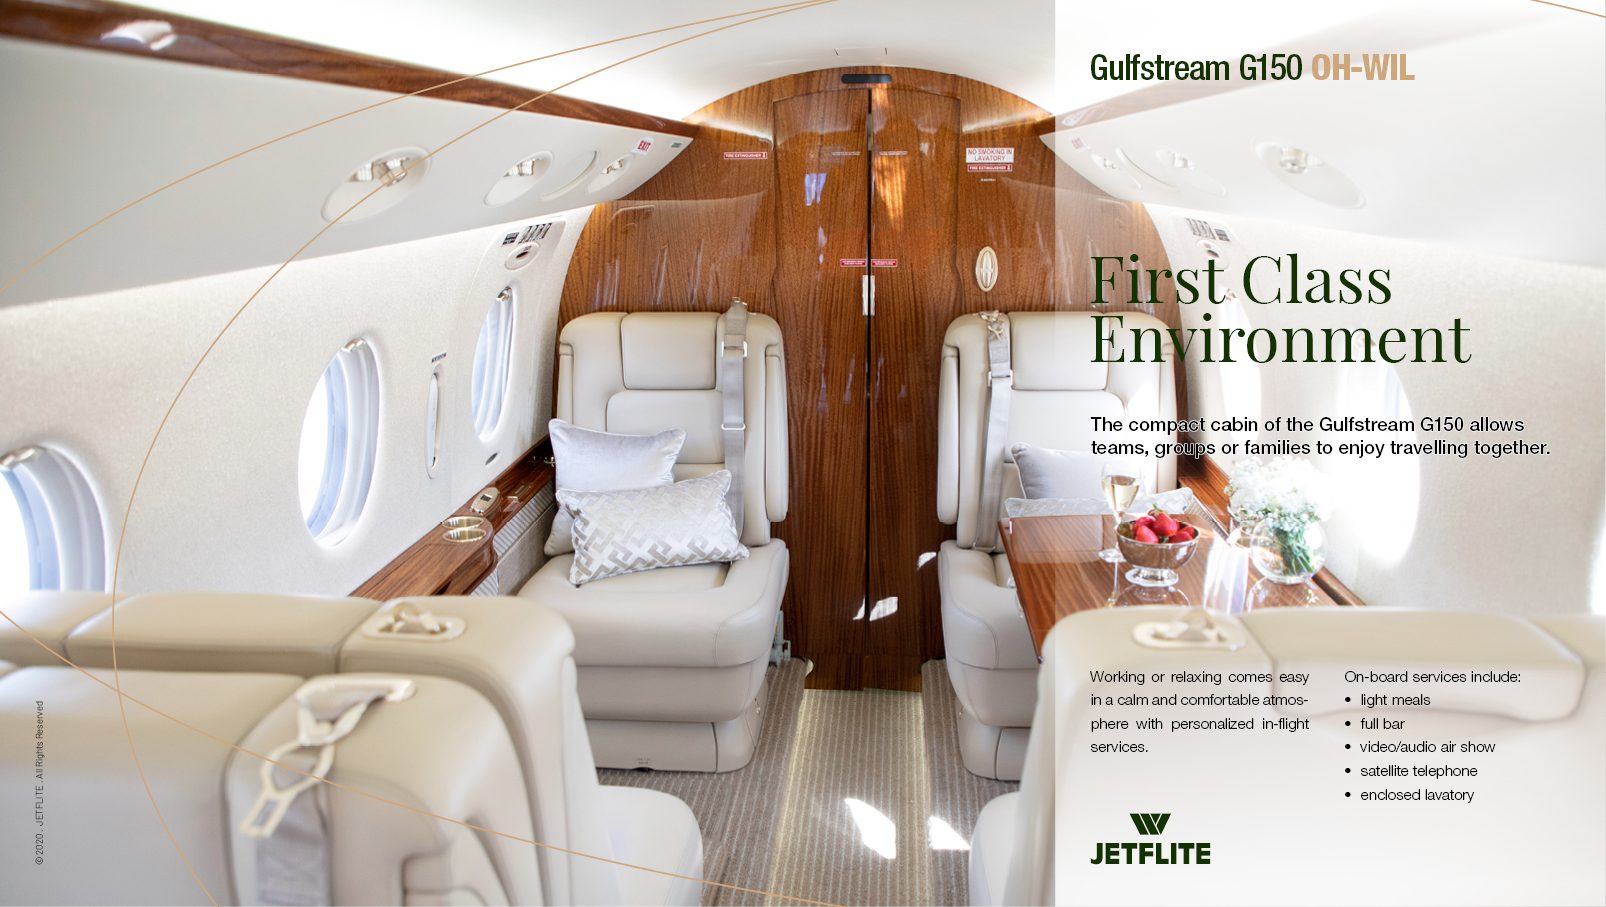 Gulfstream G150 OH-WIL